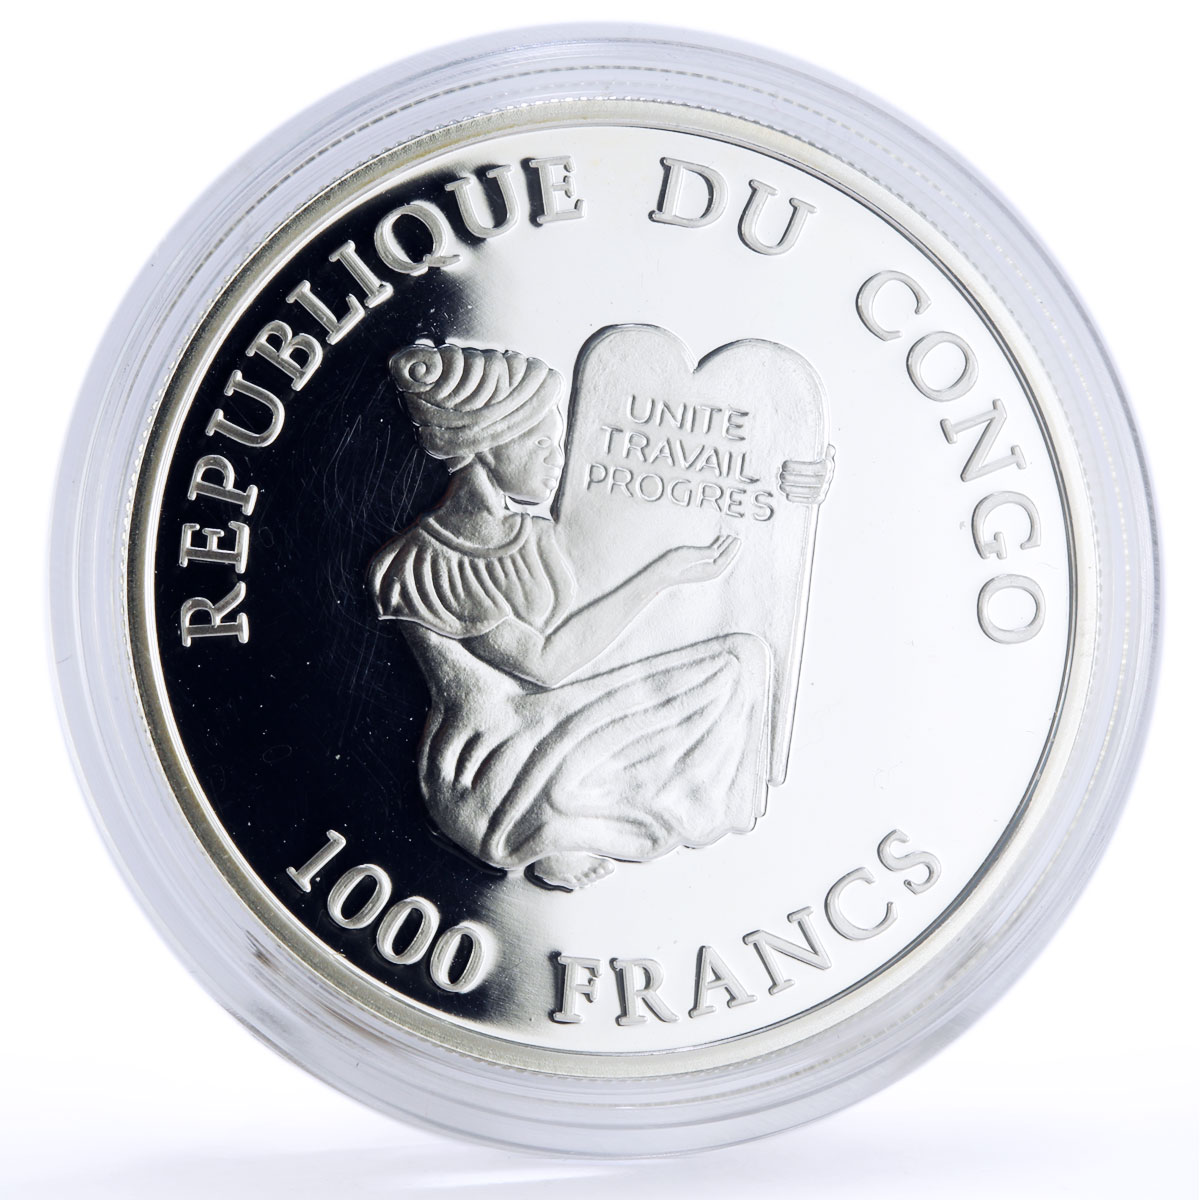 Congo 1000 francs Seafaring Portuguese Merchant Ships Clippers silver coin 2002